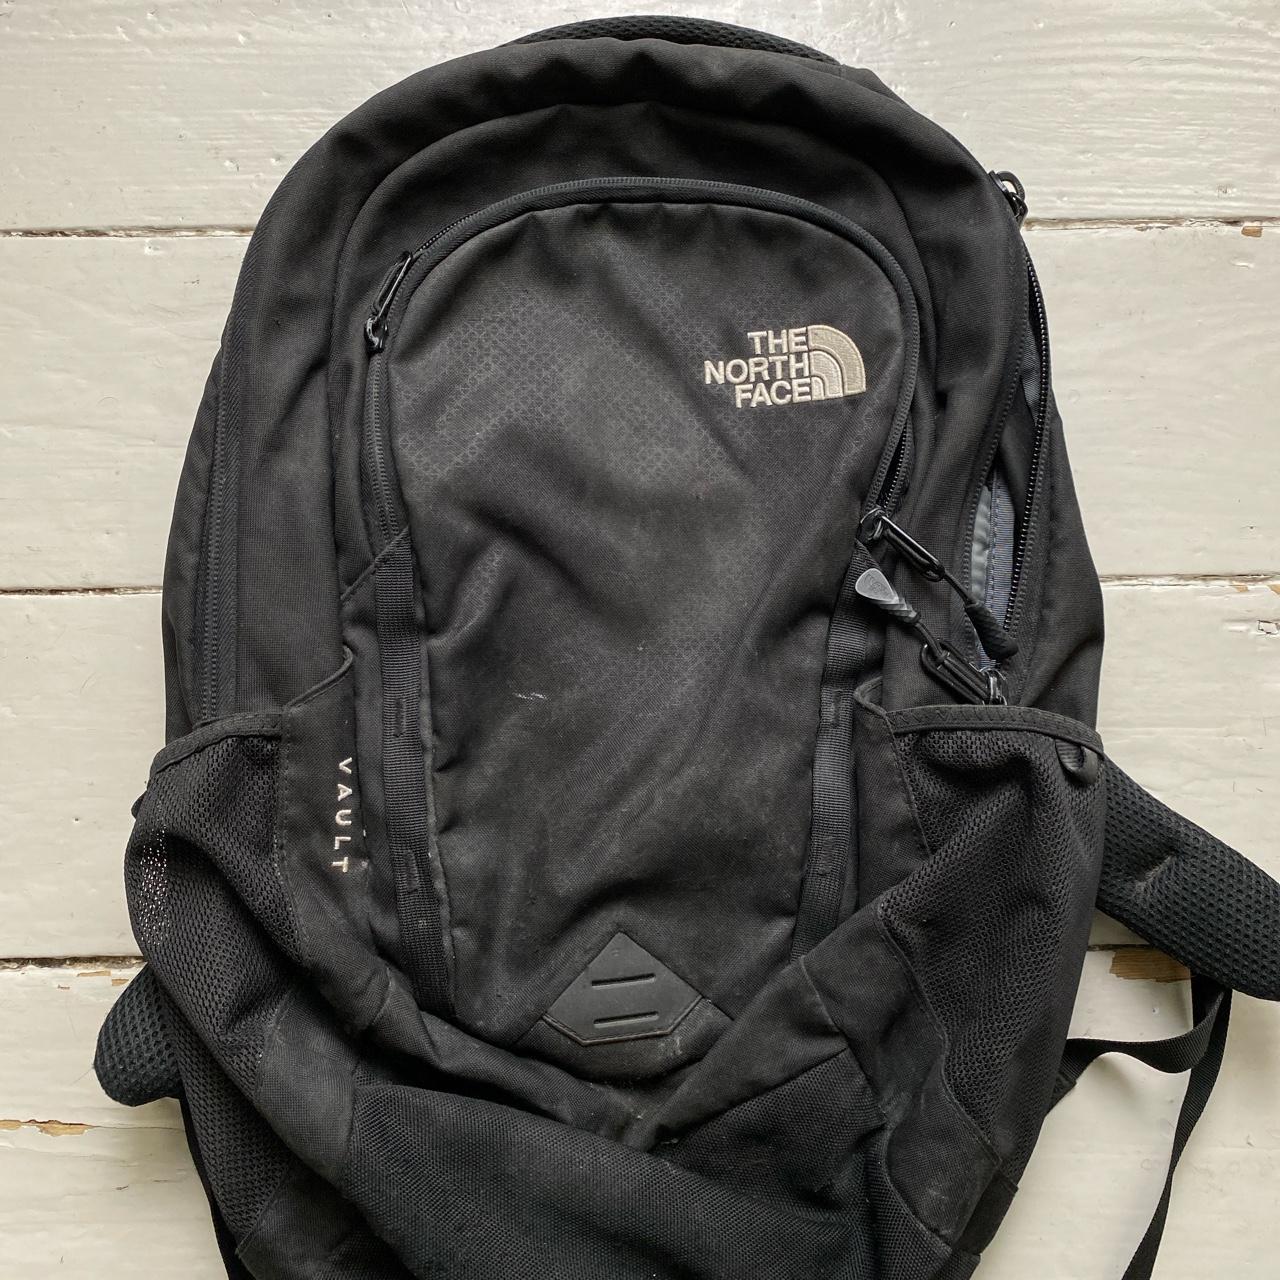 The North Face Vault Rucksack Backpack Bag Black and White